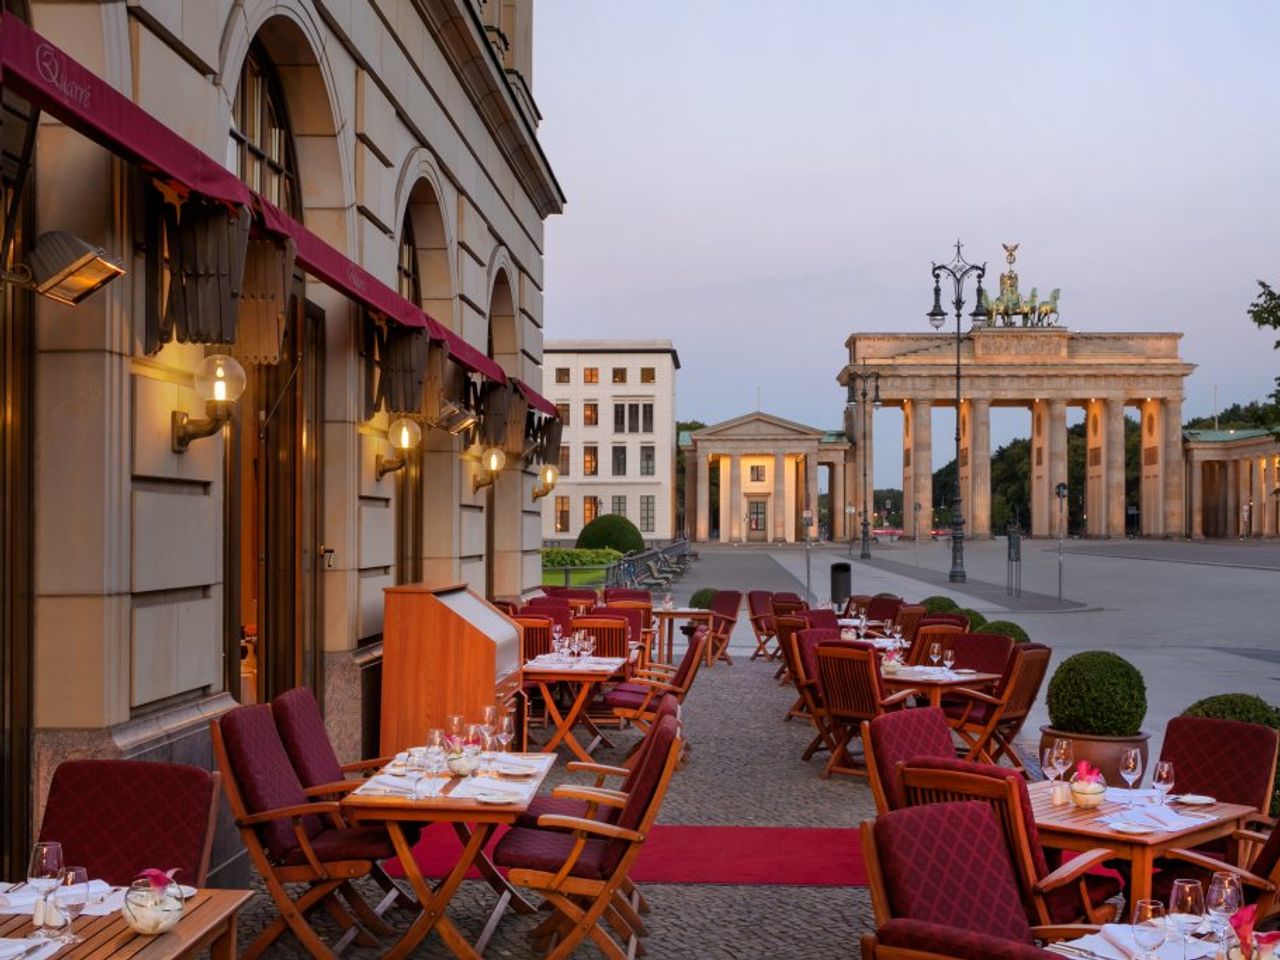 6 Tage im Hotel Adlon Kempinski Berlin mit Frühstück